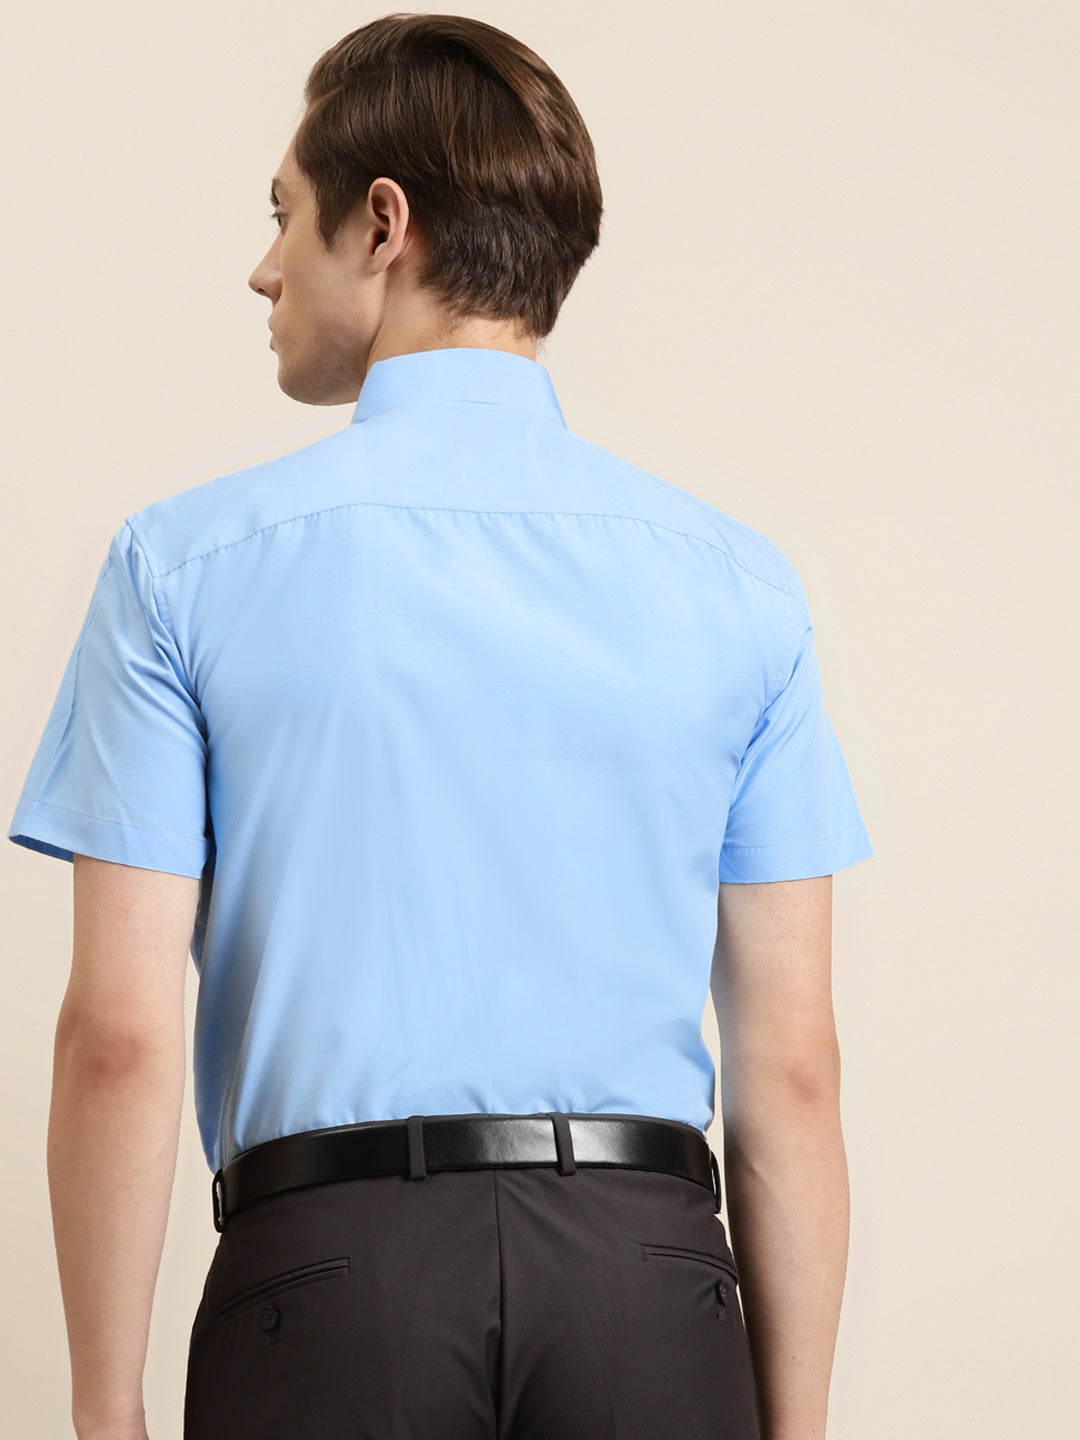 Men's Cotton Sky blue Classic Formal Shirt - Sojanya